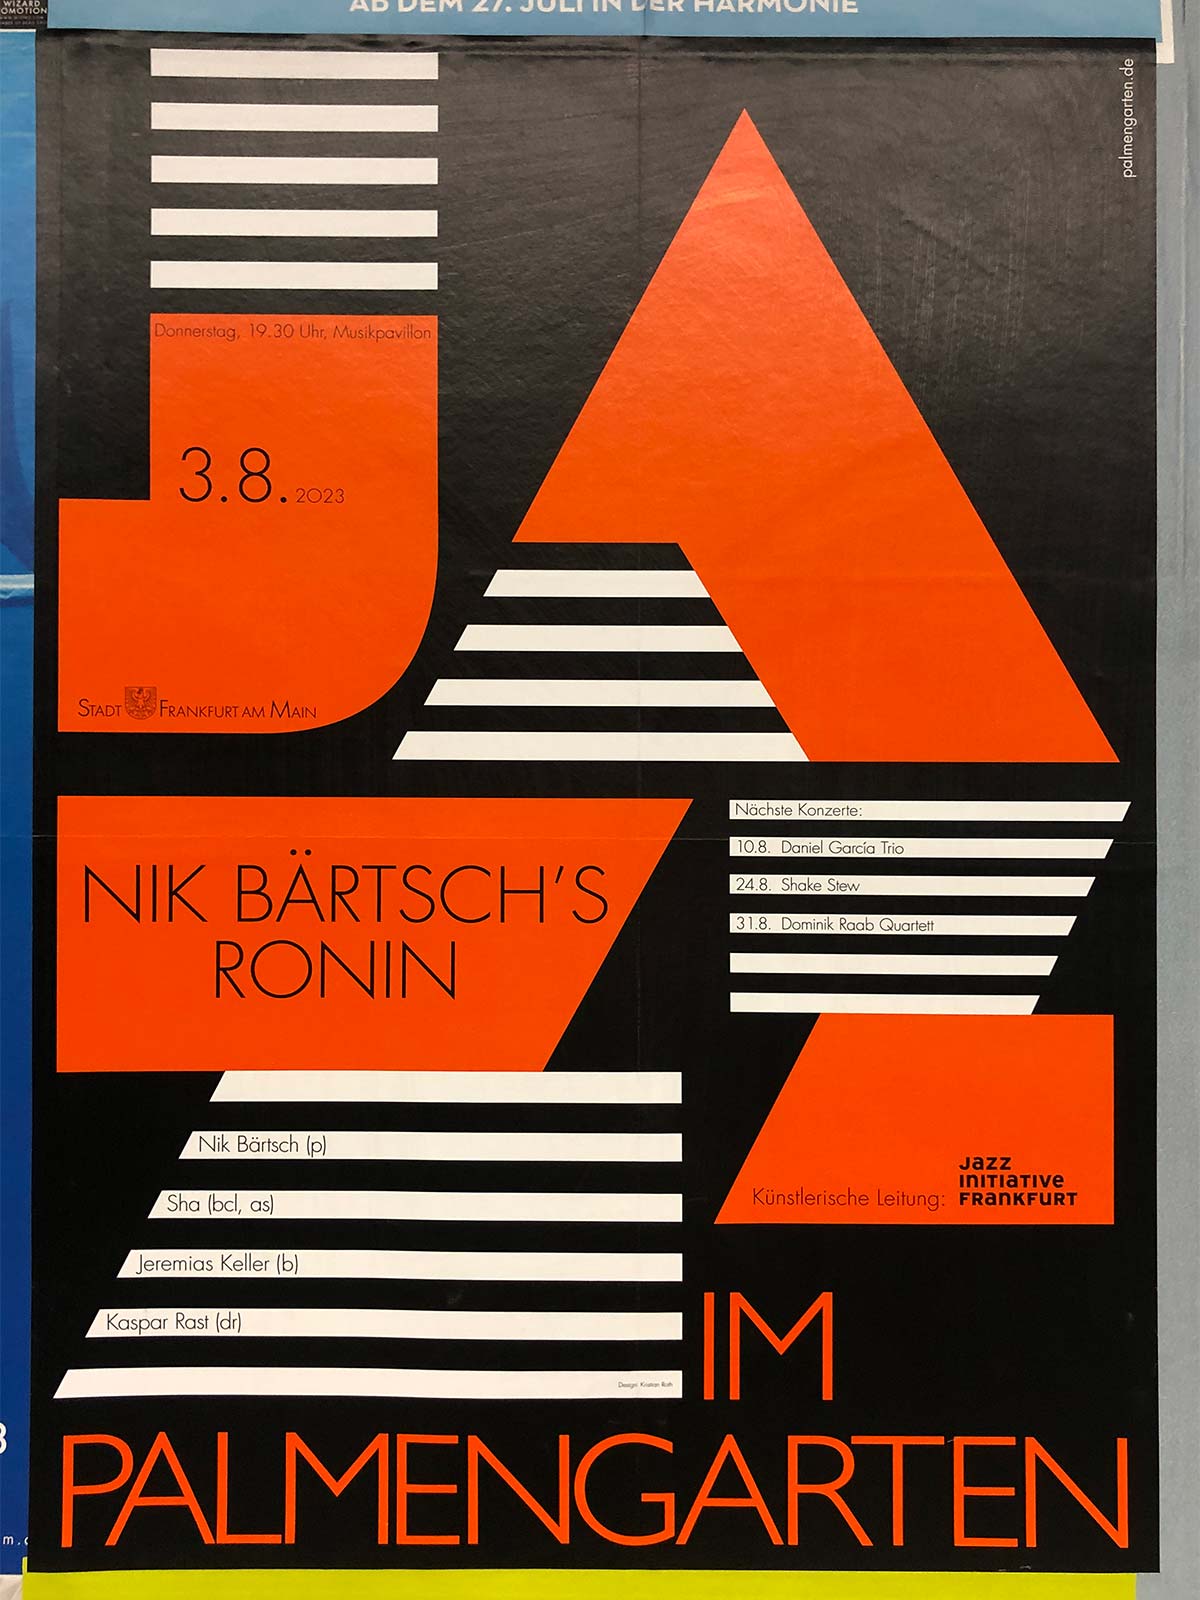 Plakat Design in Frankfurt - Jazz im Palmengarten 2023 (Orange Farbe)